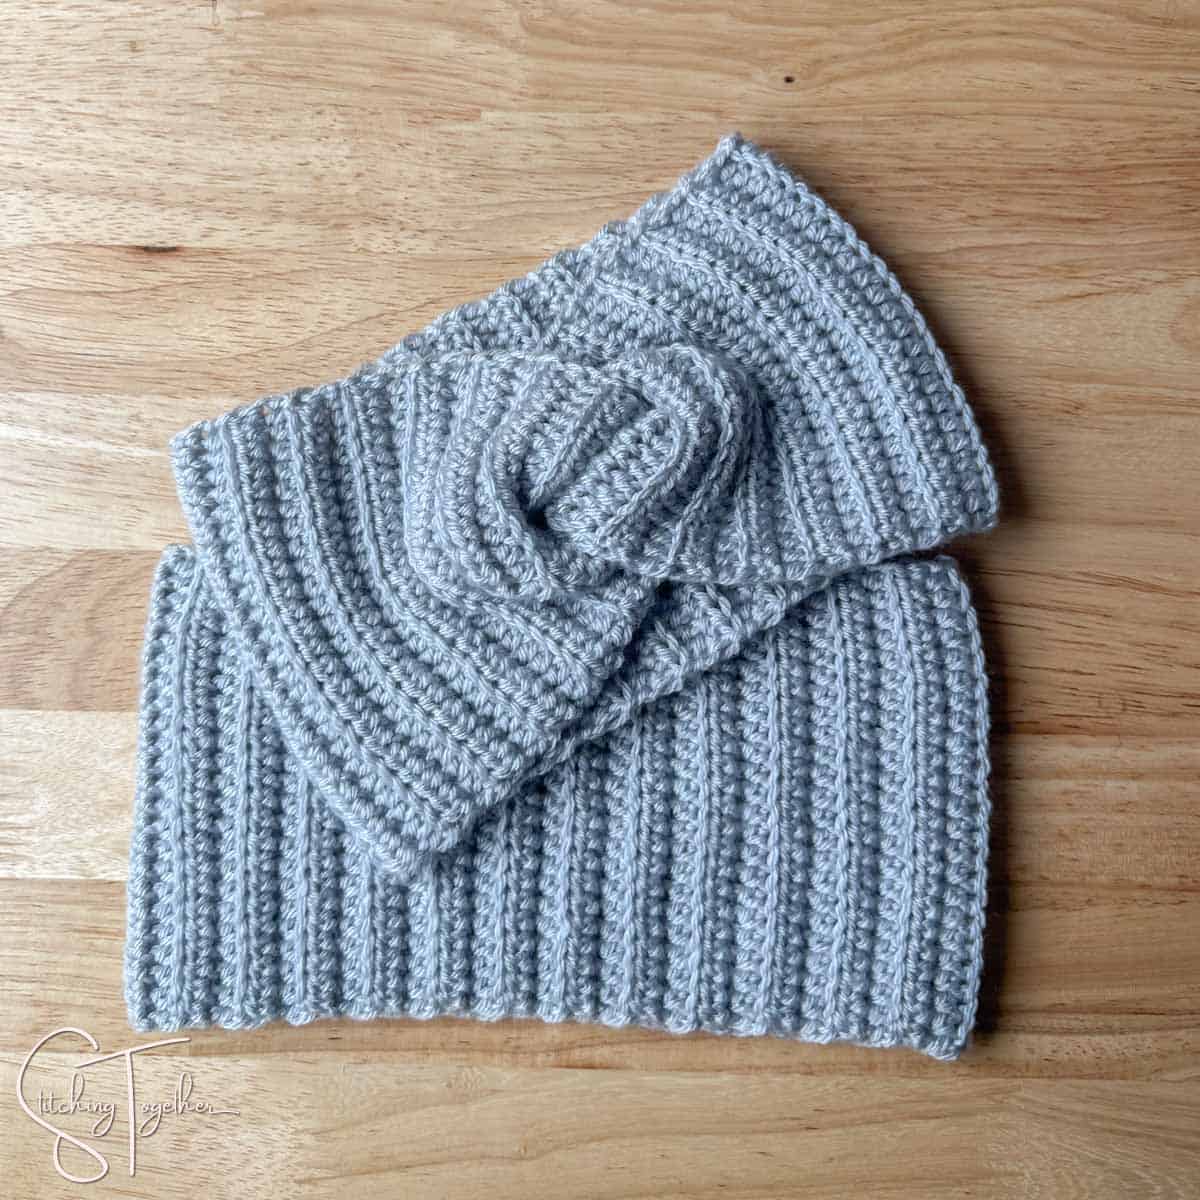 a crochet twisted headband and a ribbed headband laying flat